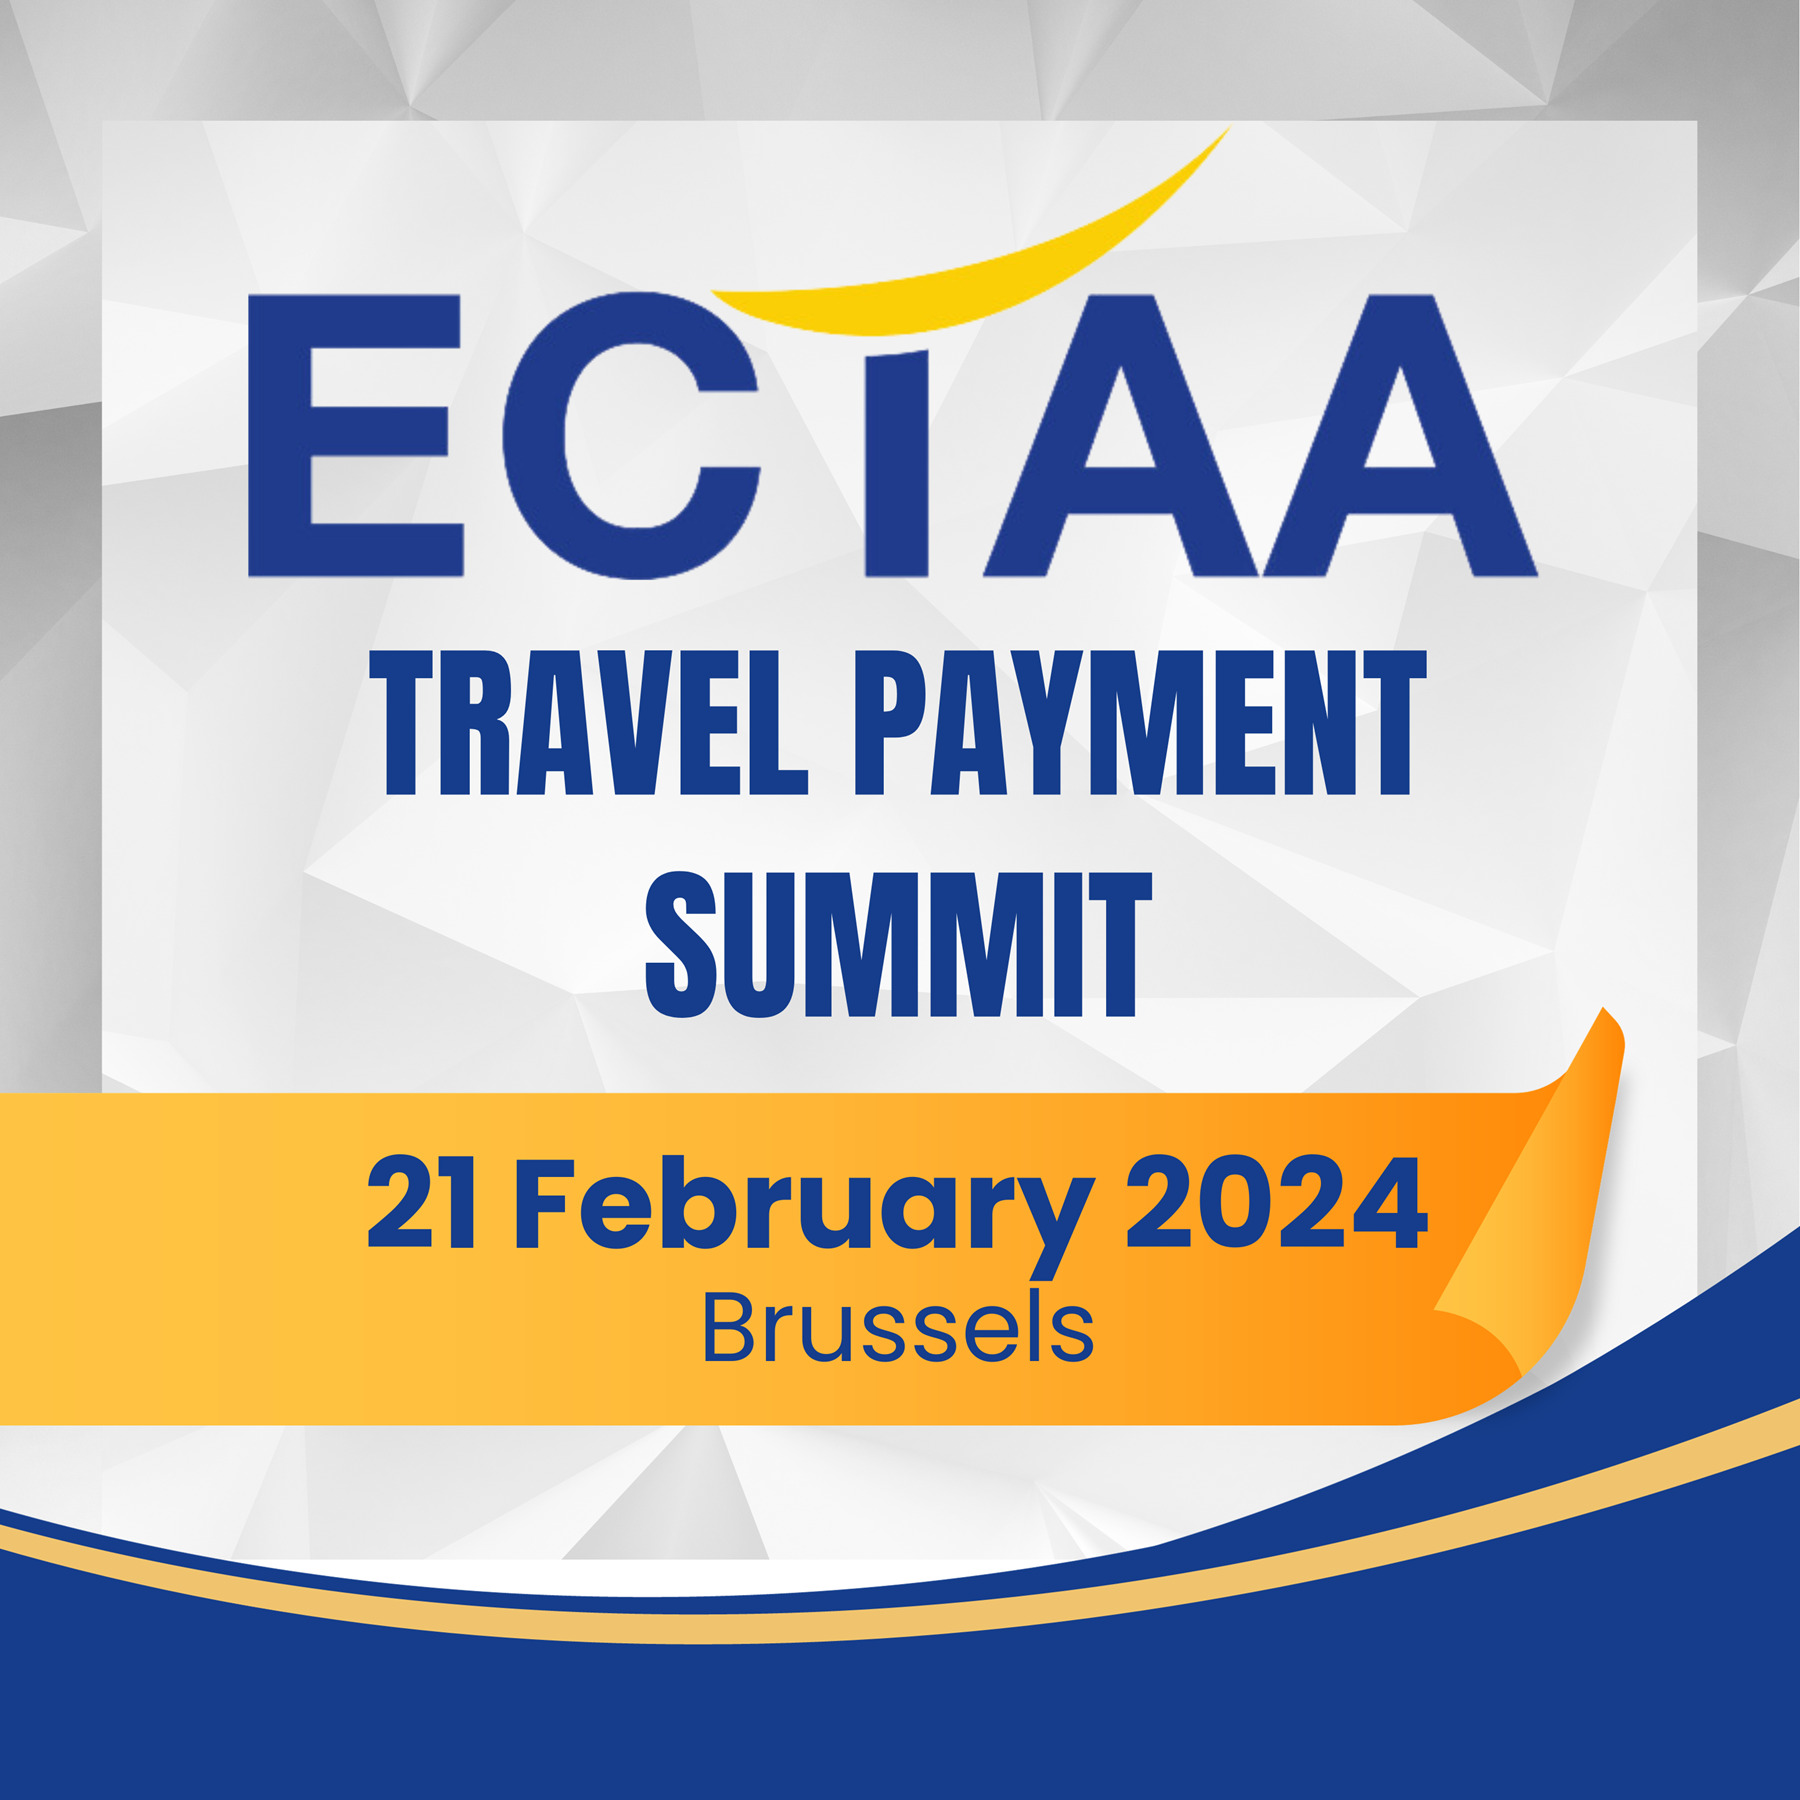 ECTAA Travel Payment Summit